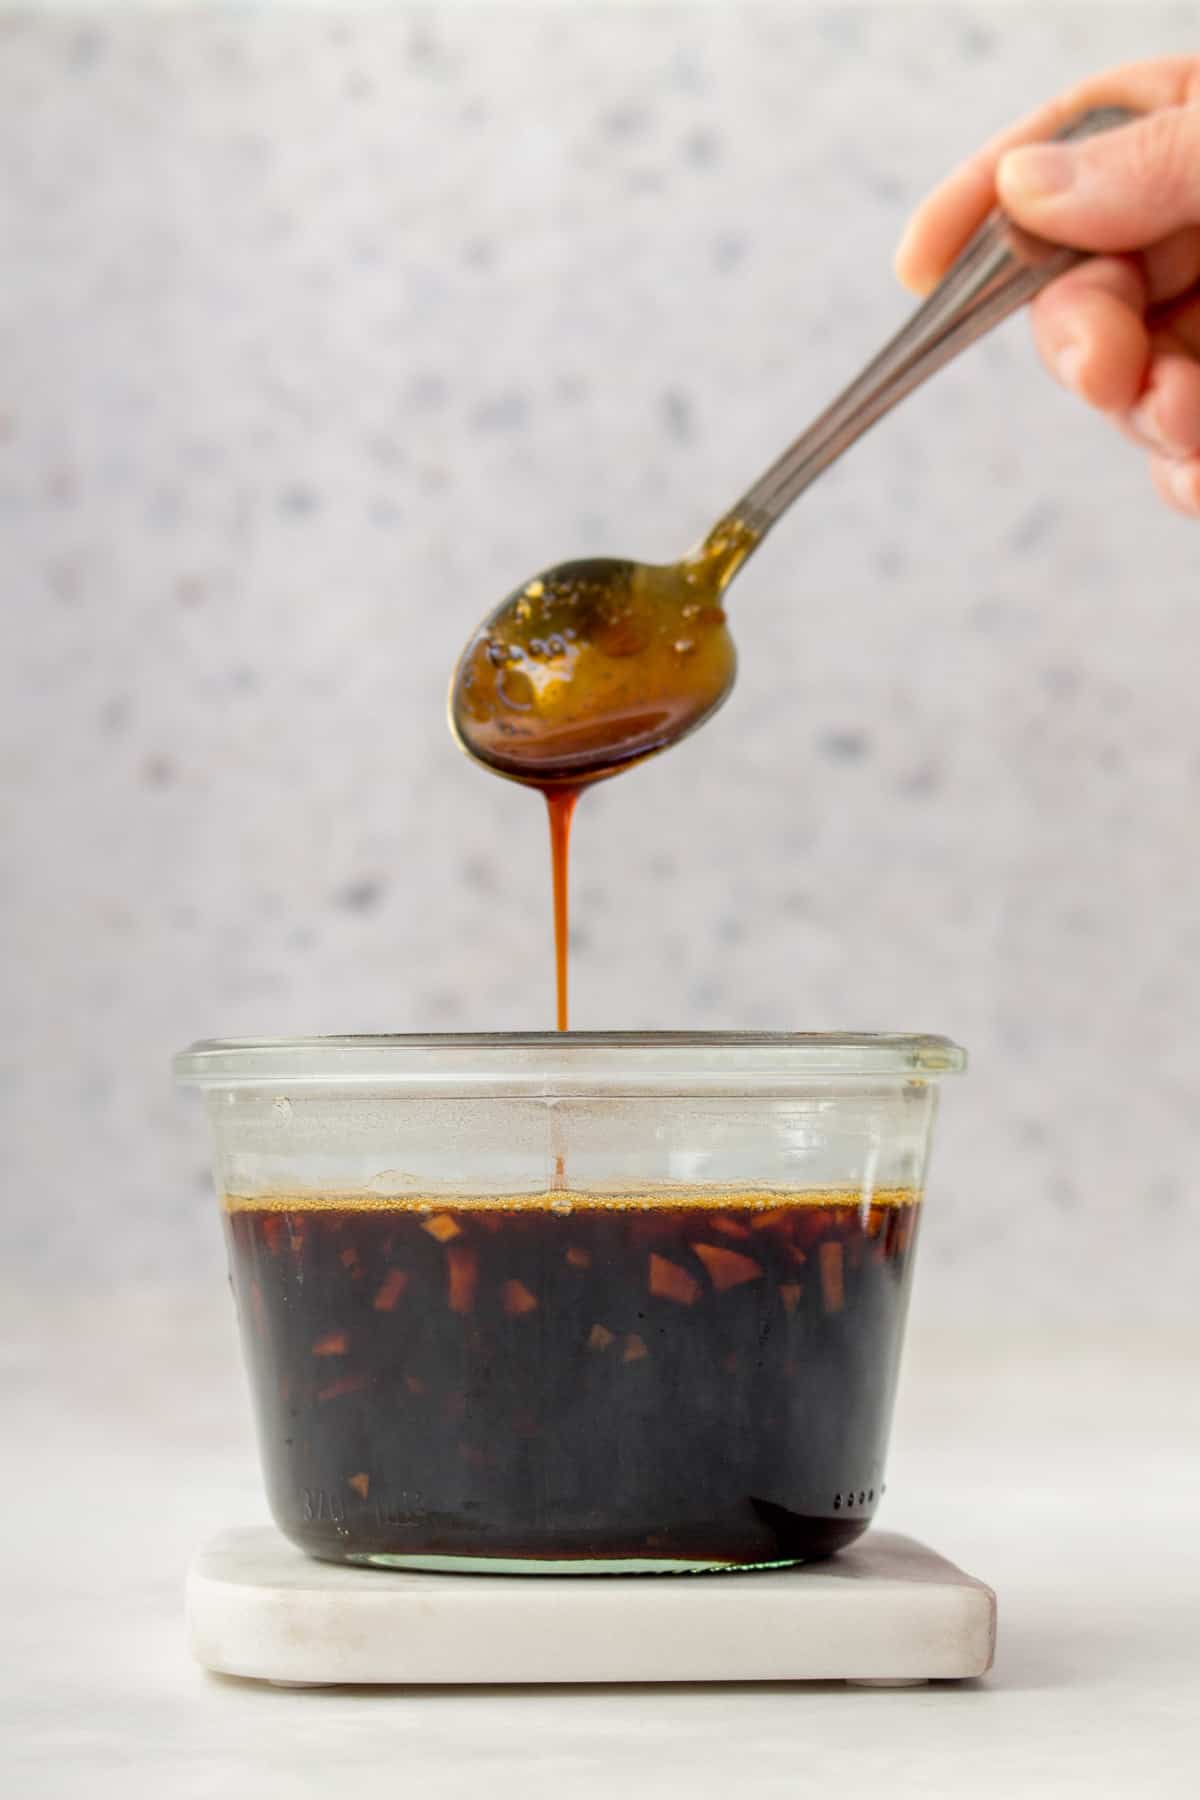 Teriyaki sauce dripping off a spoon into a jar.